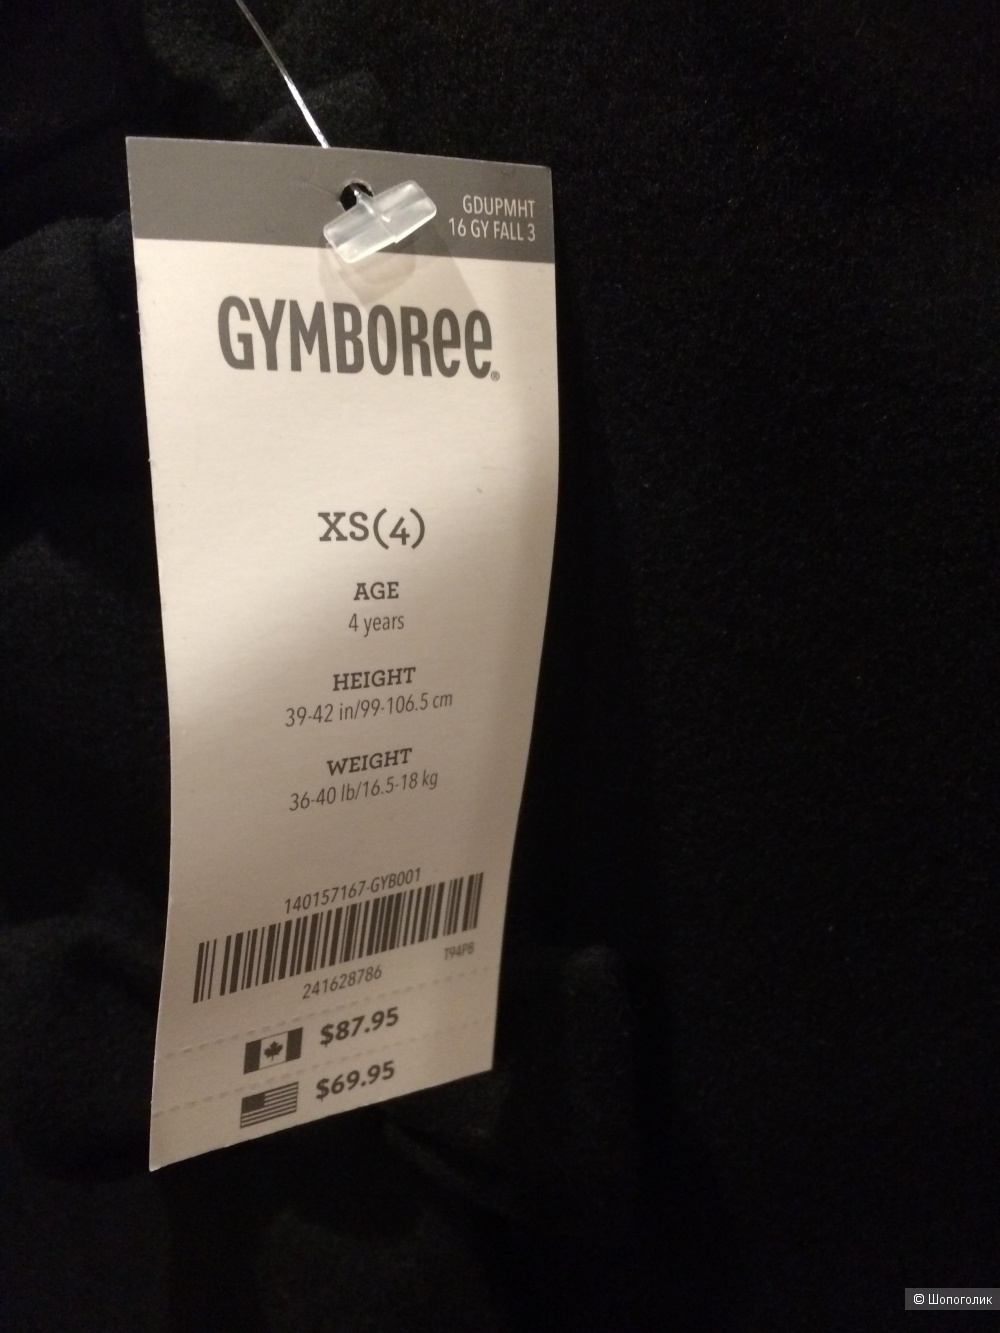 Пальто Джимбори Gymboree размер 99-106 (XS)